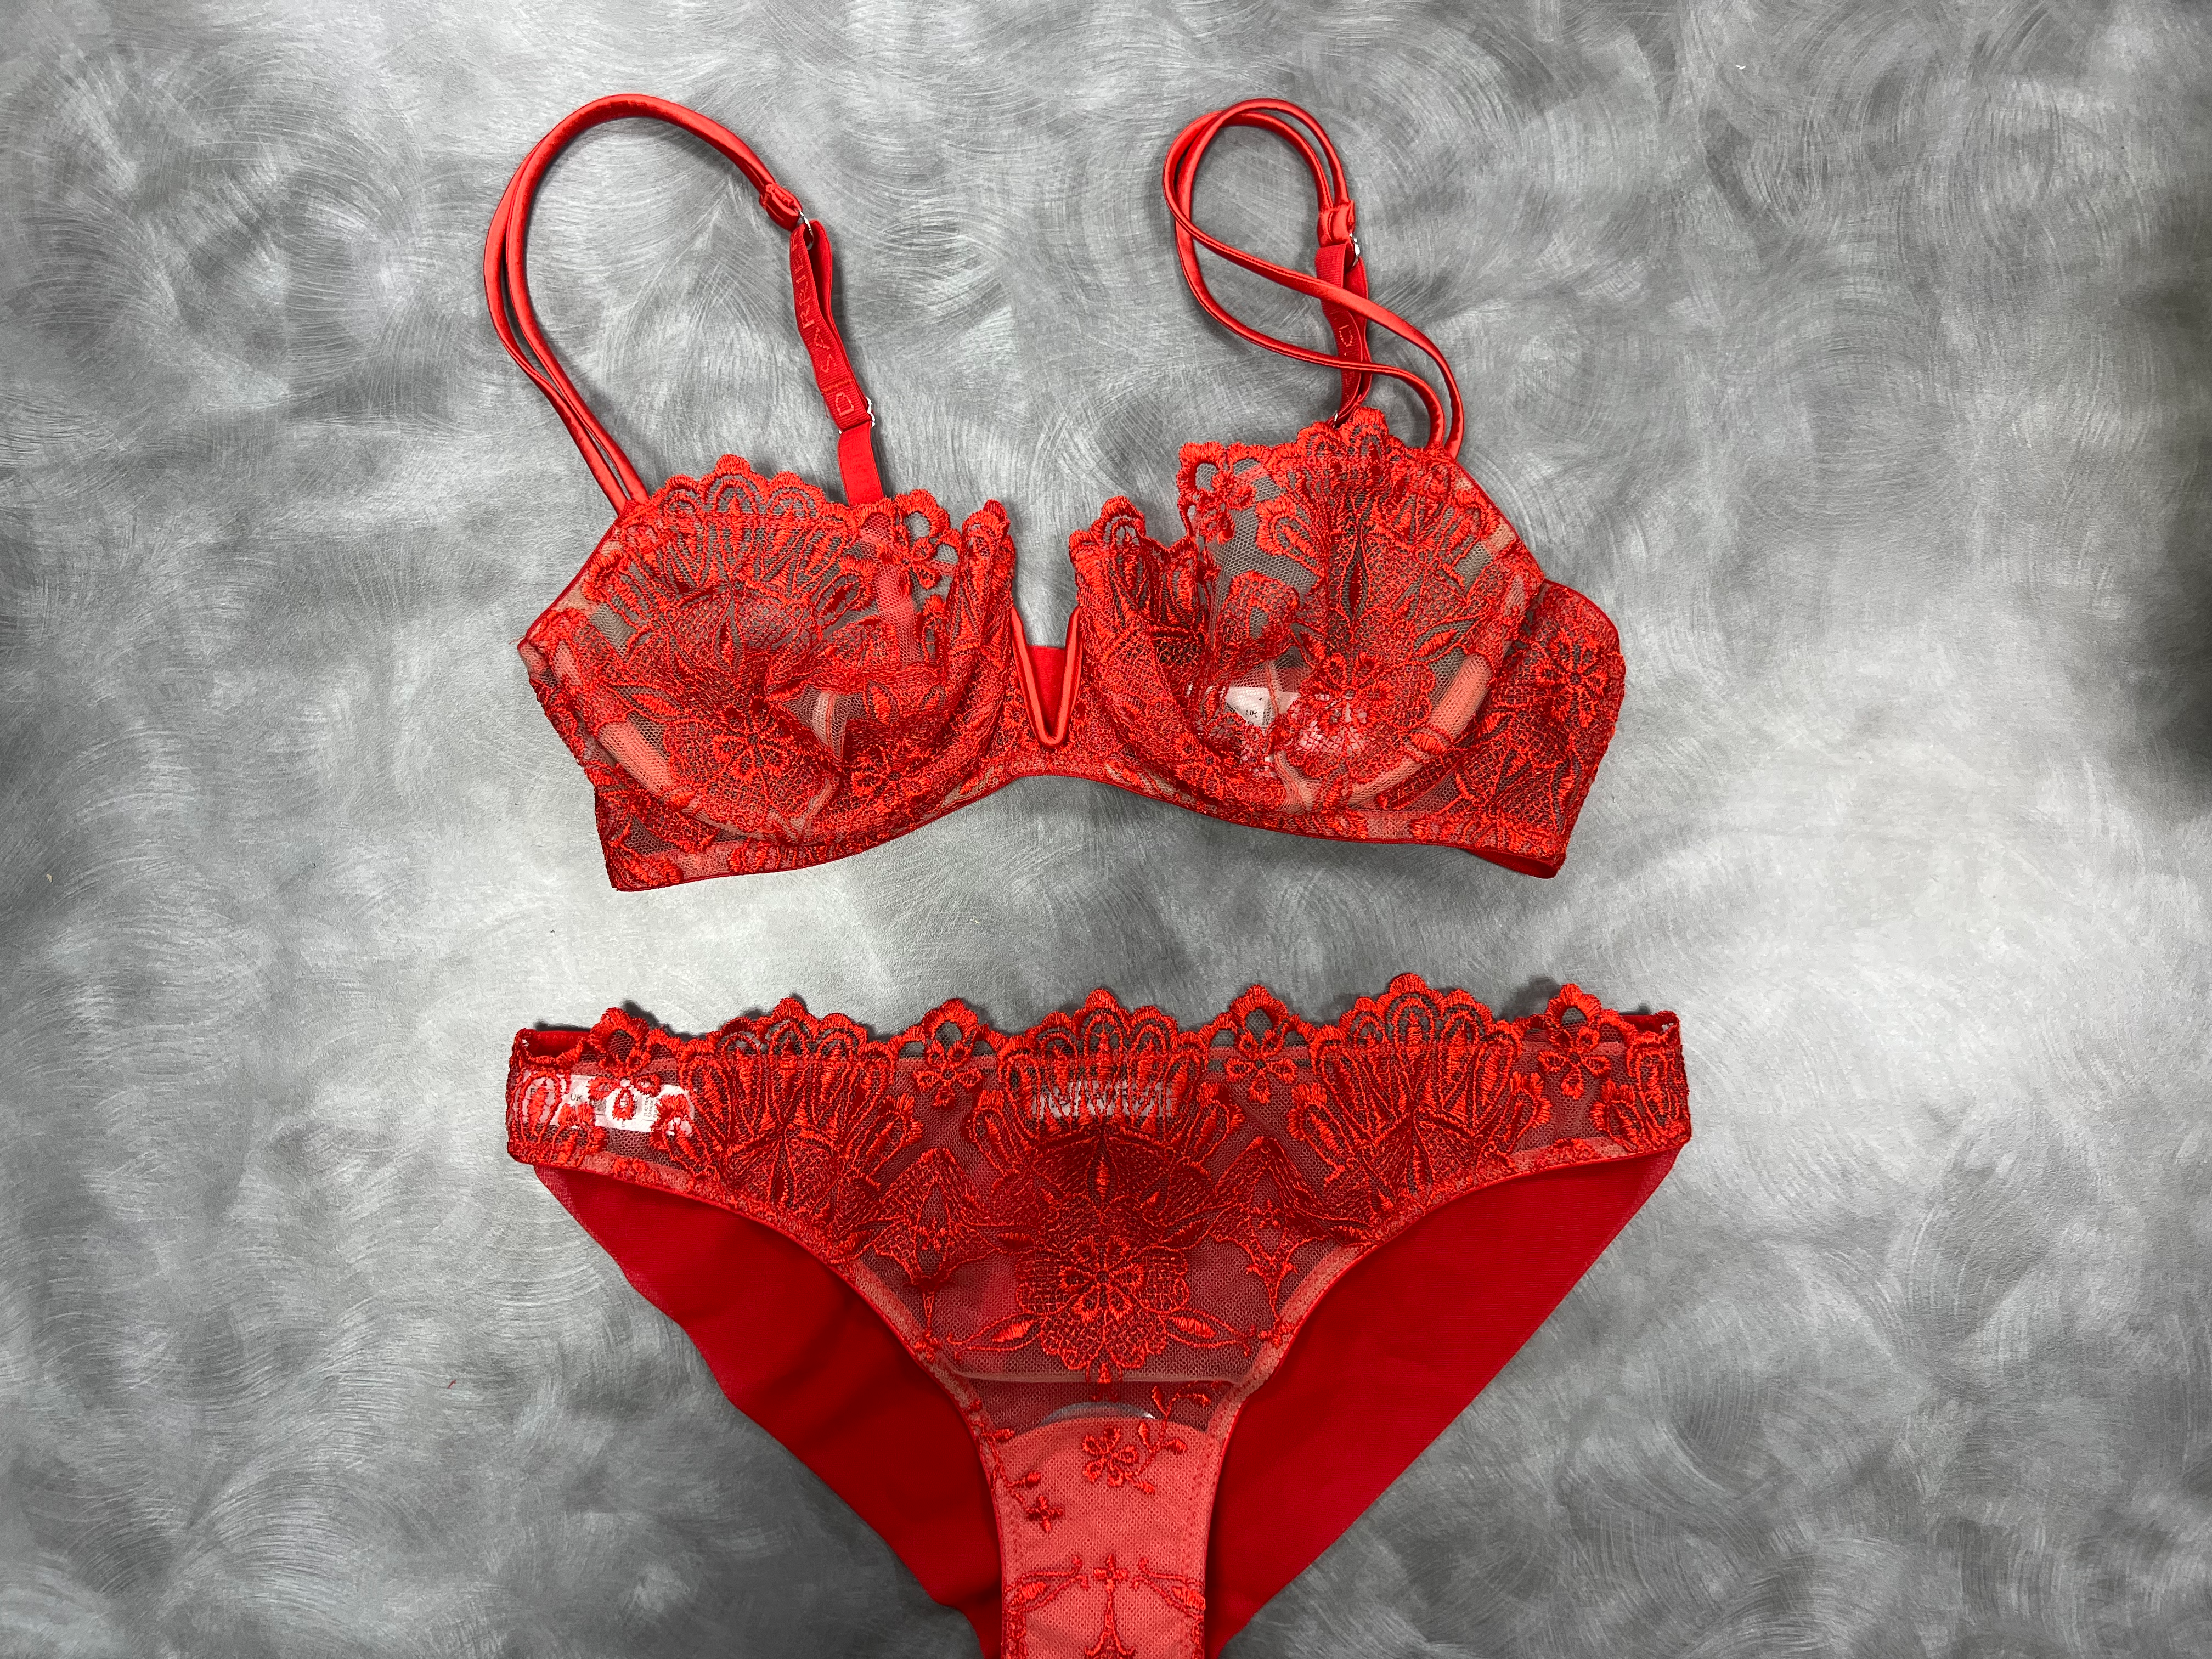 I.D. Sarrieri crossette half cup bra and brief best red lingerie sets